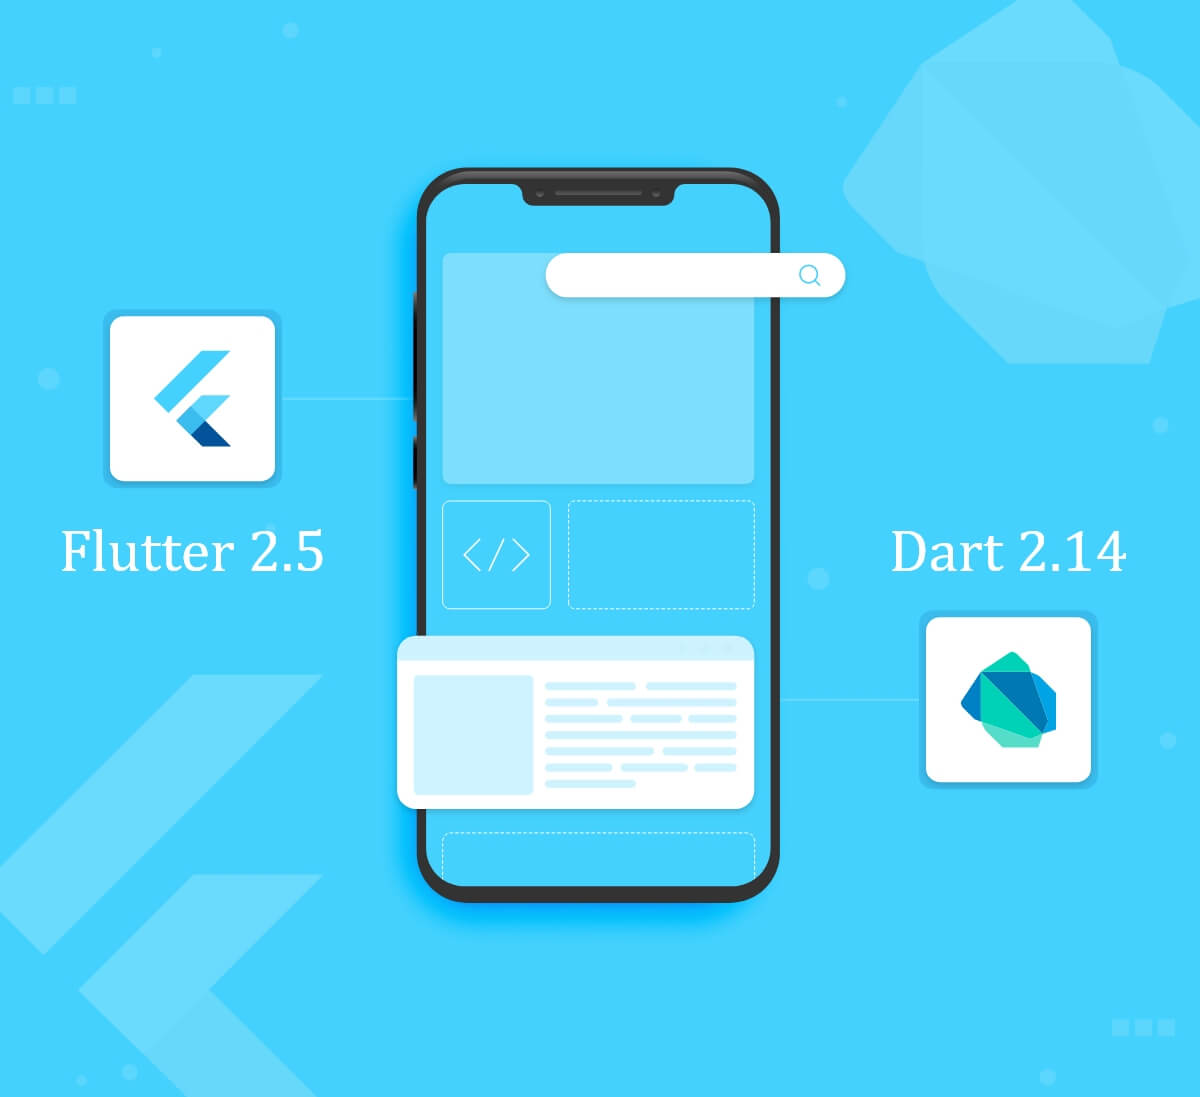 Flutter 2.5 Release Note